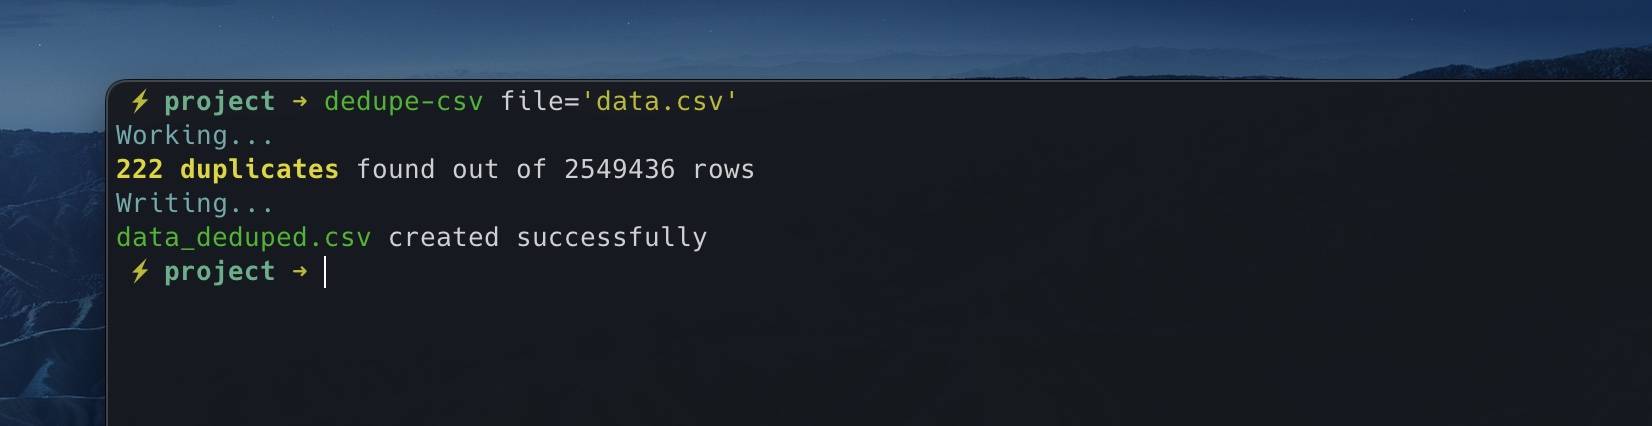 dedupe-csv outputting a file